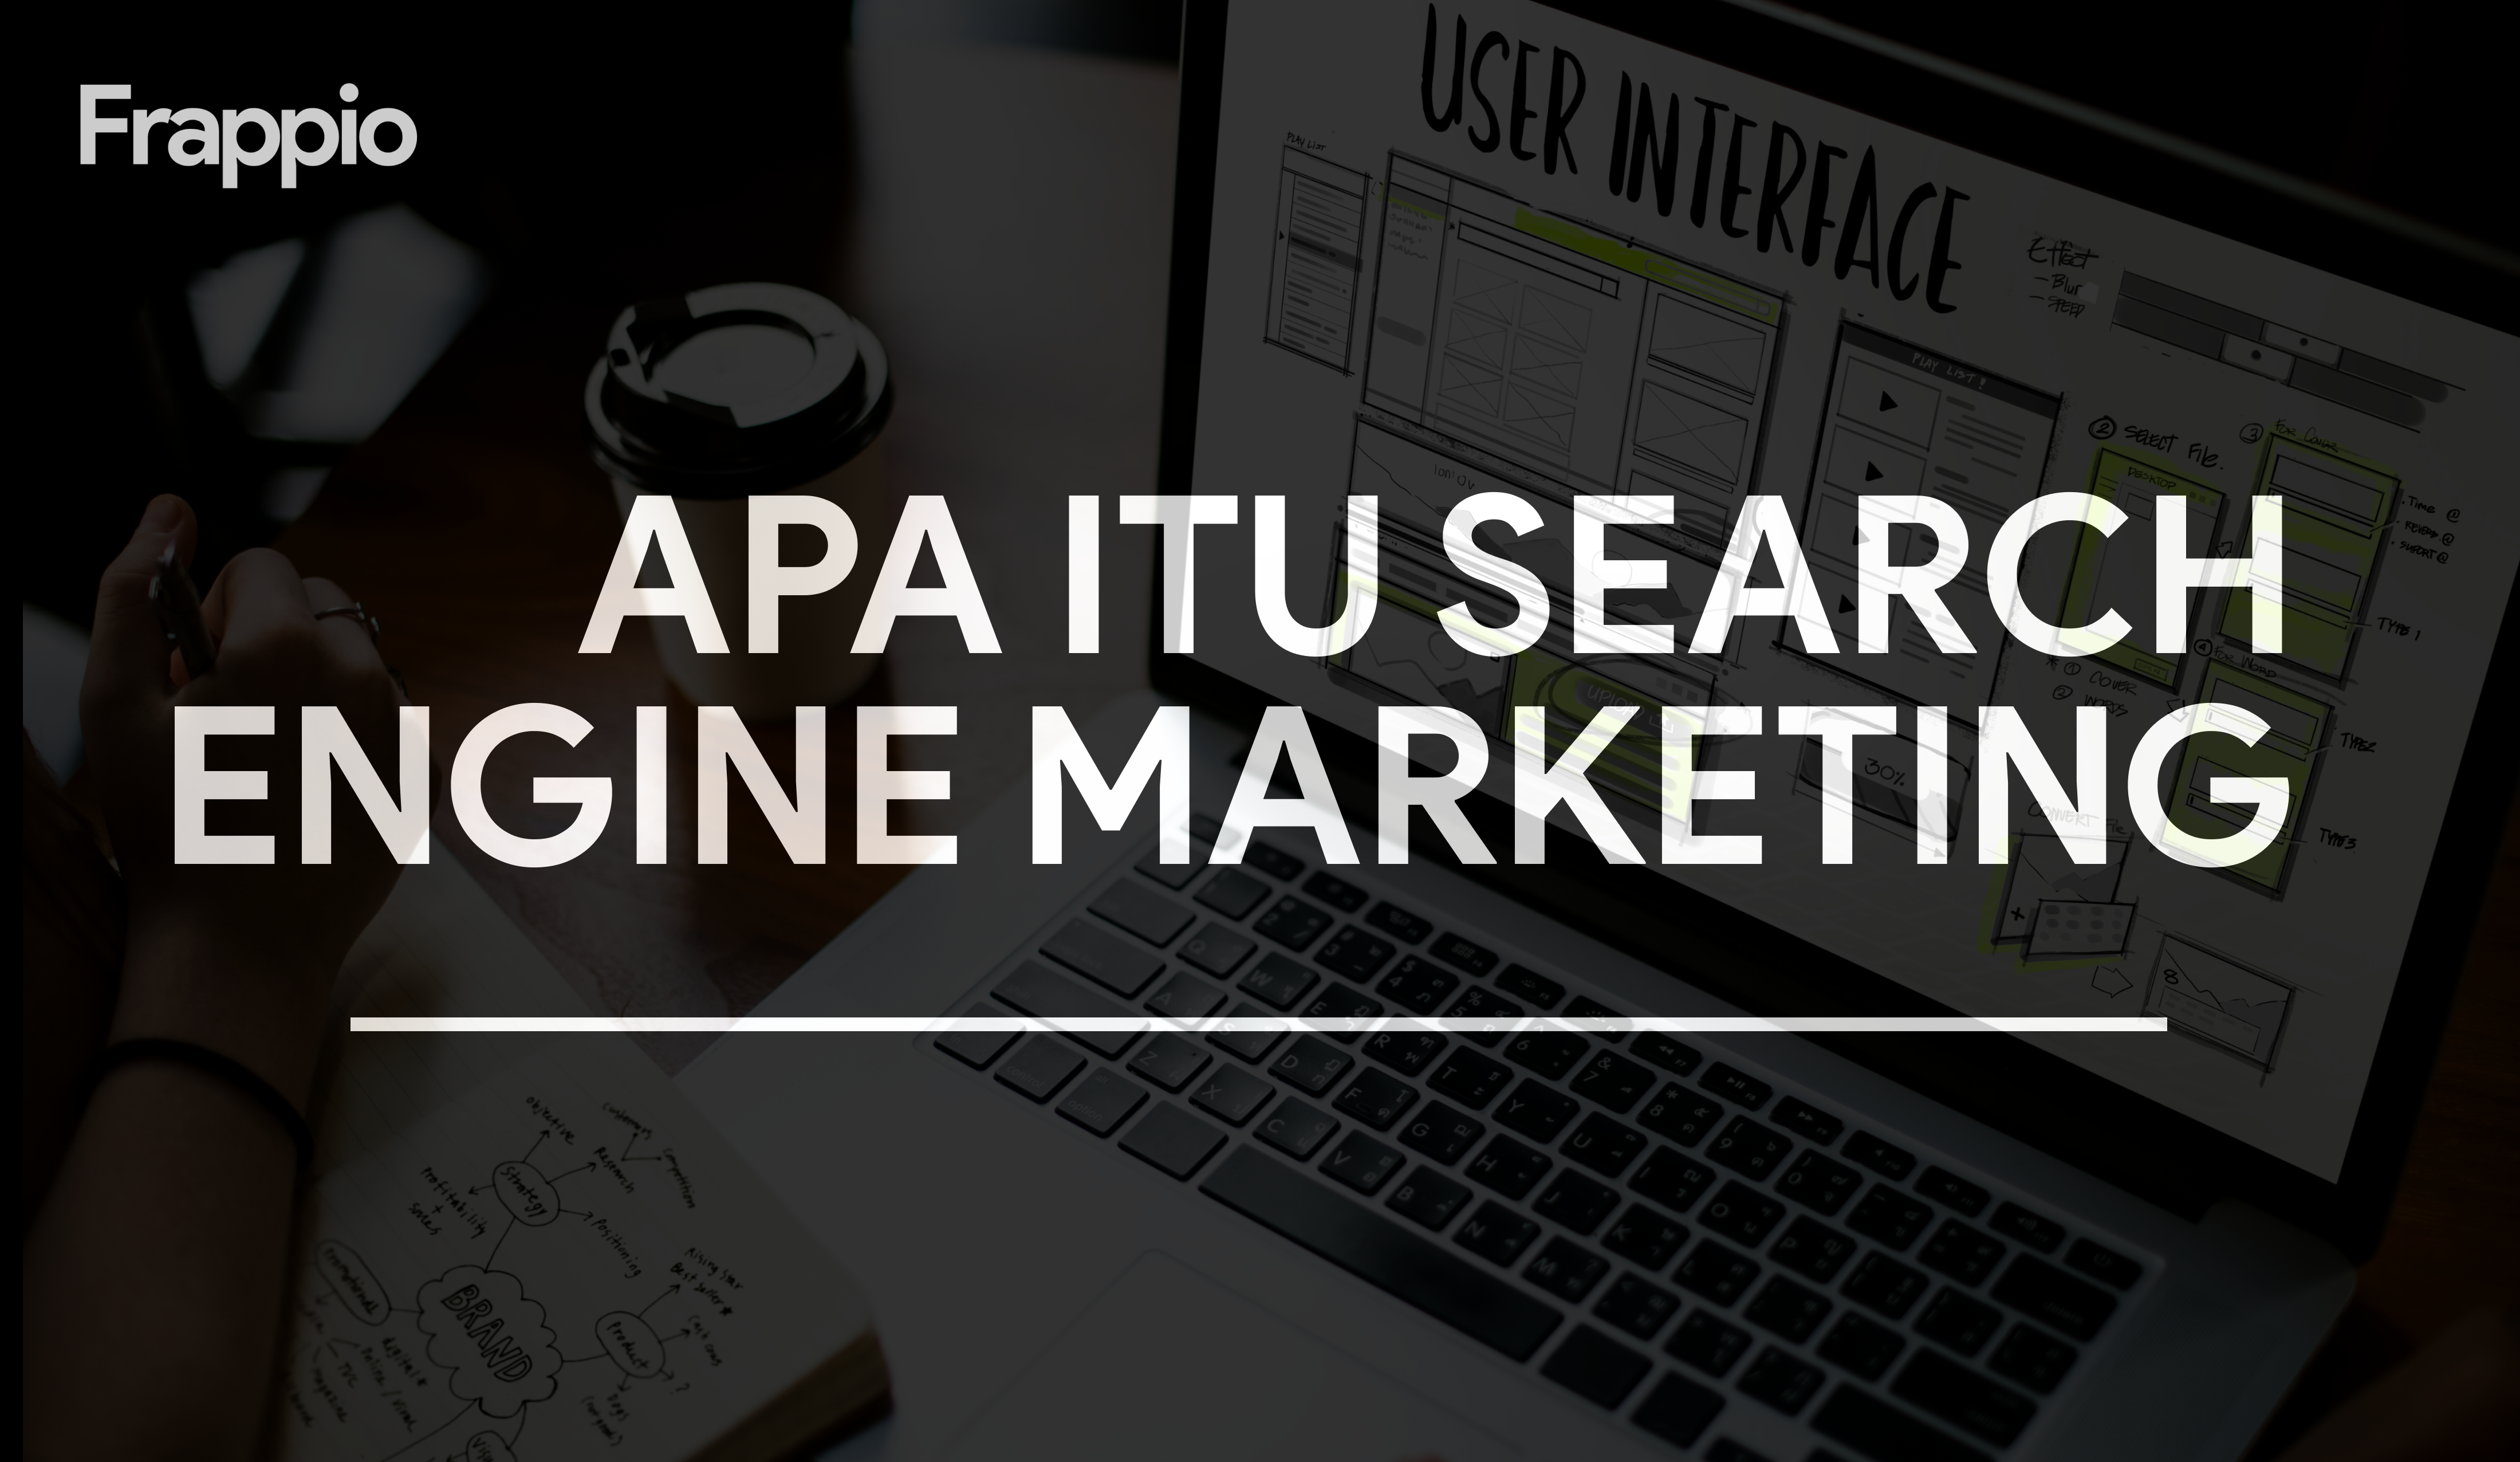 Apa Itu Search Engine Marketing?